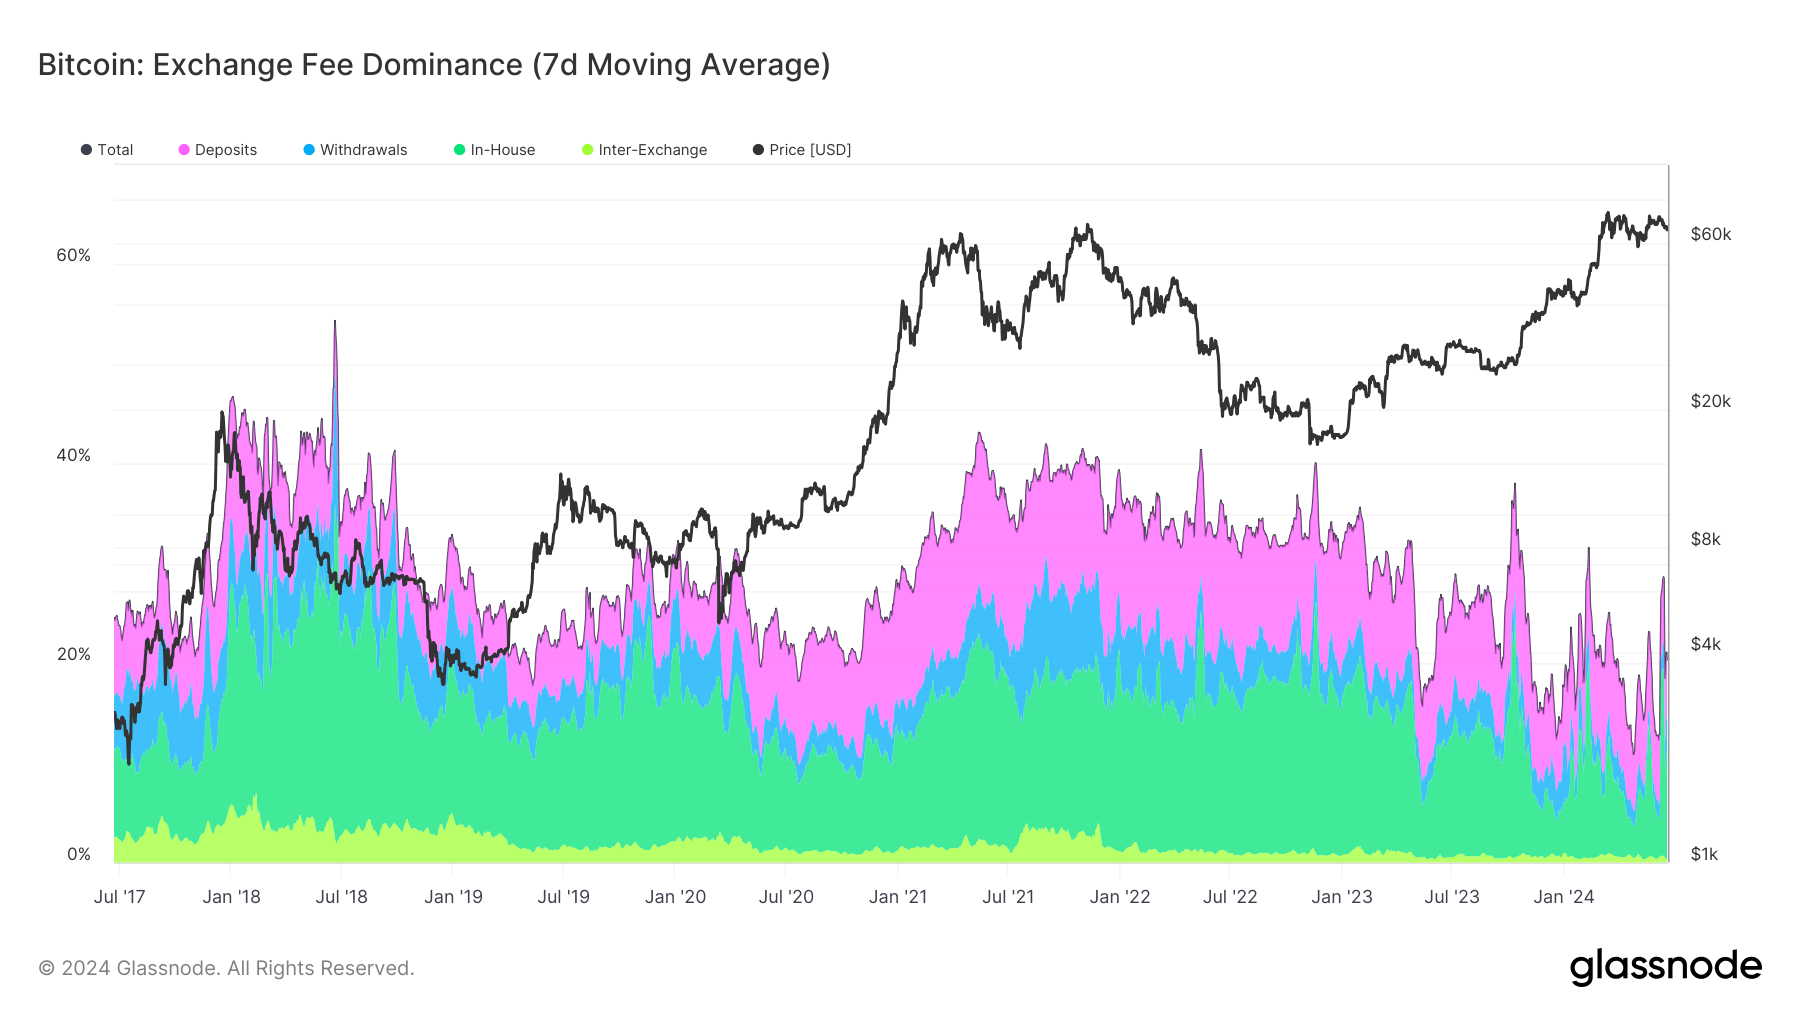 Bitcoin’s Exchange Fee Dominance Analysis